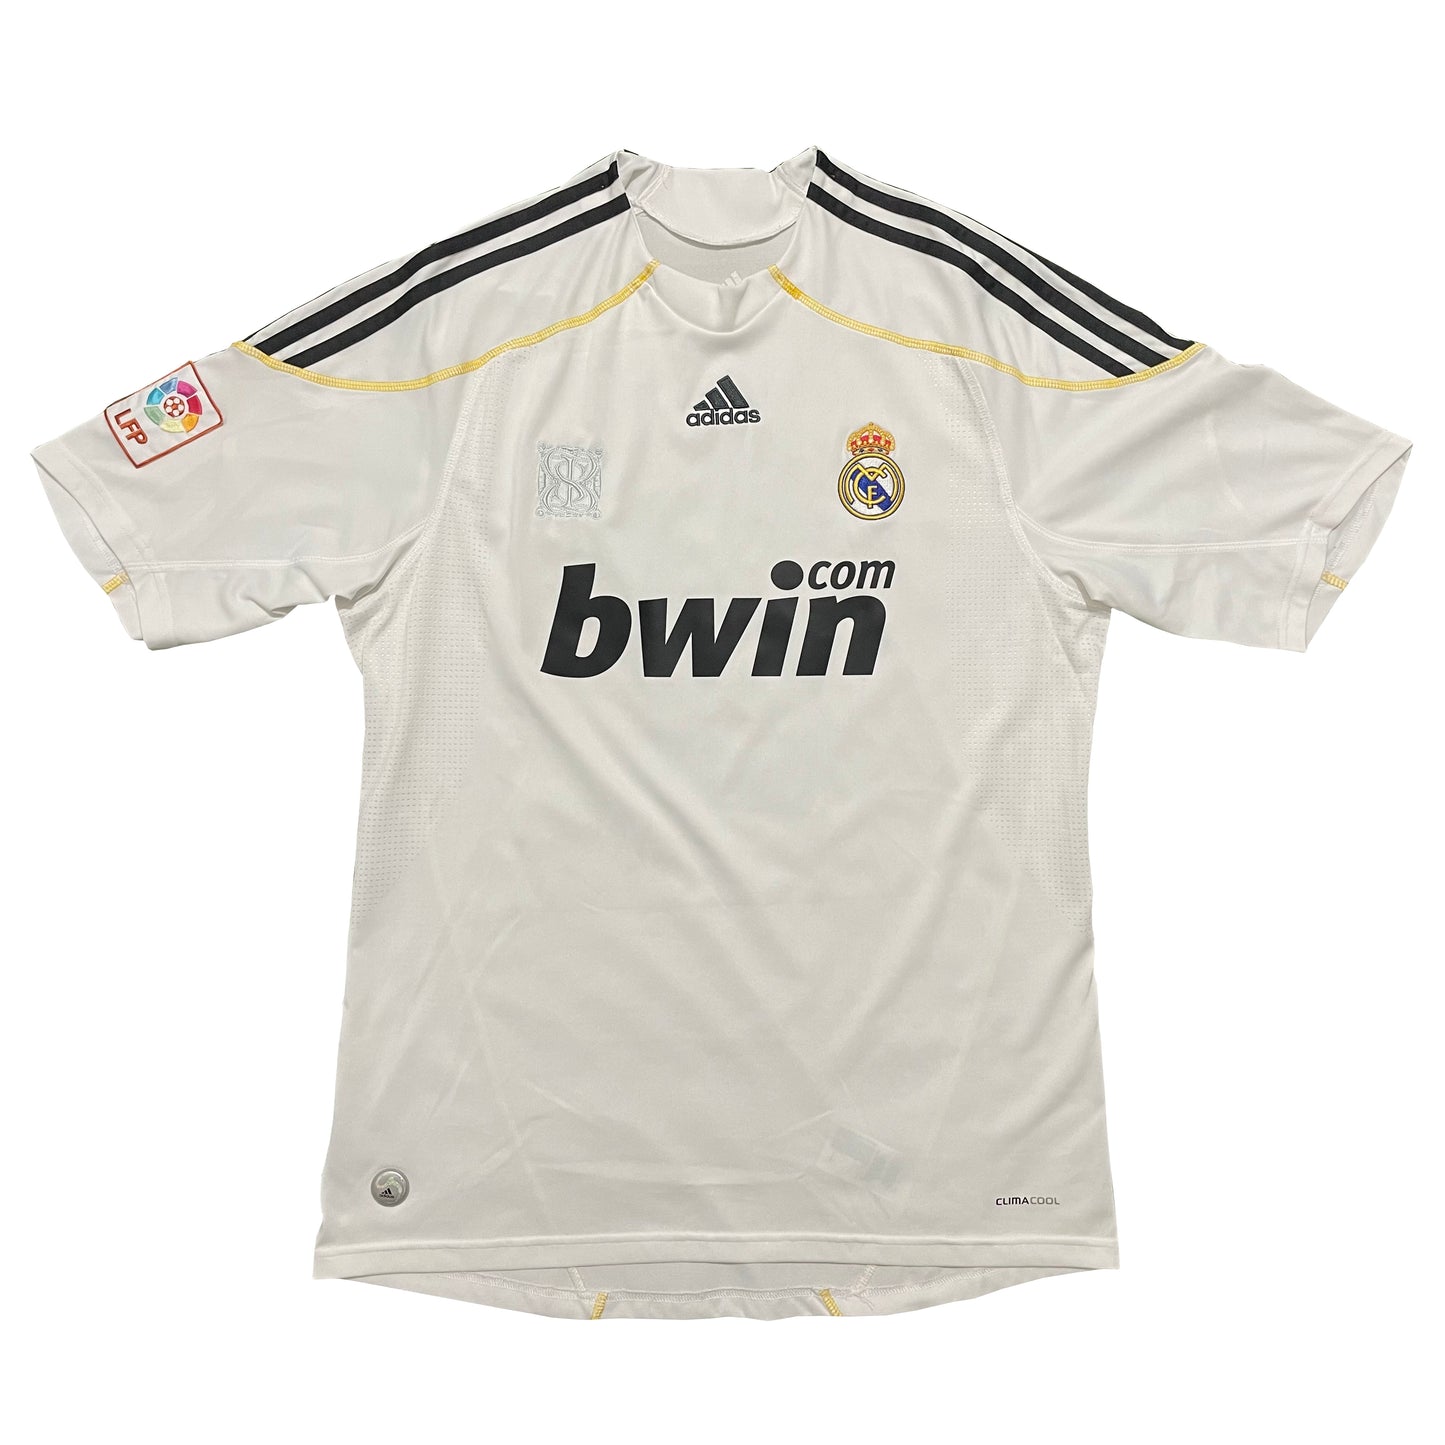 2009-2010 Real Madrid CF home shirt #9 Ronaldo (L)